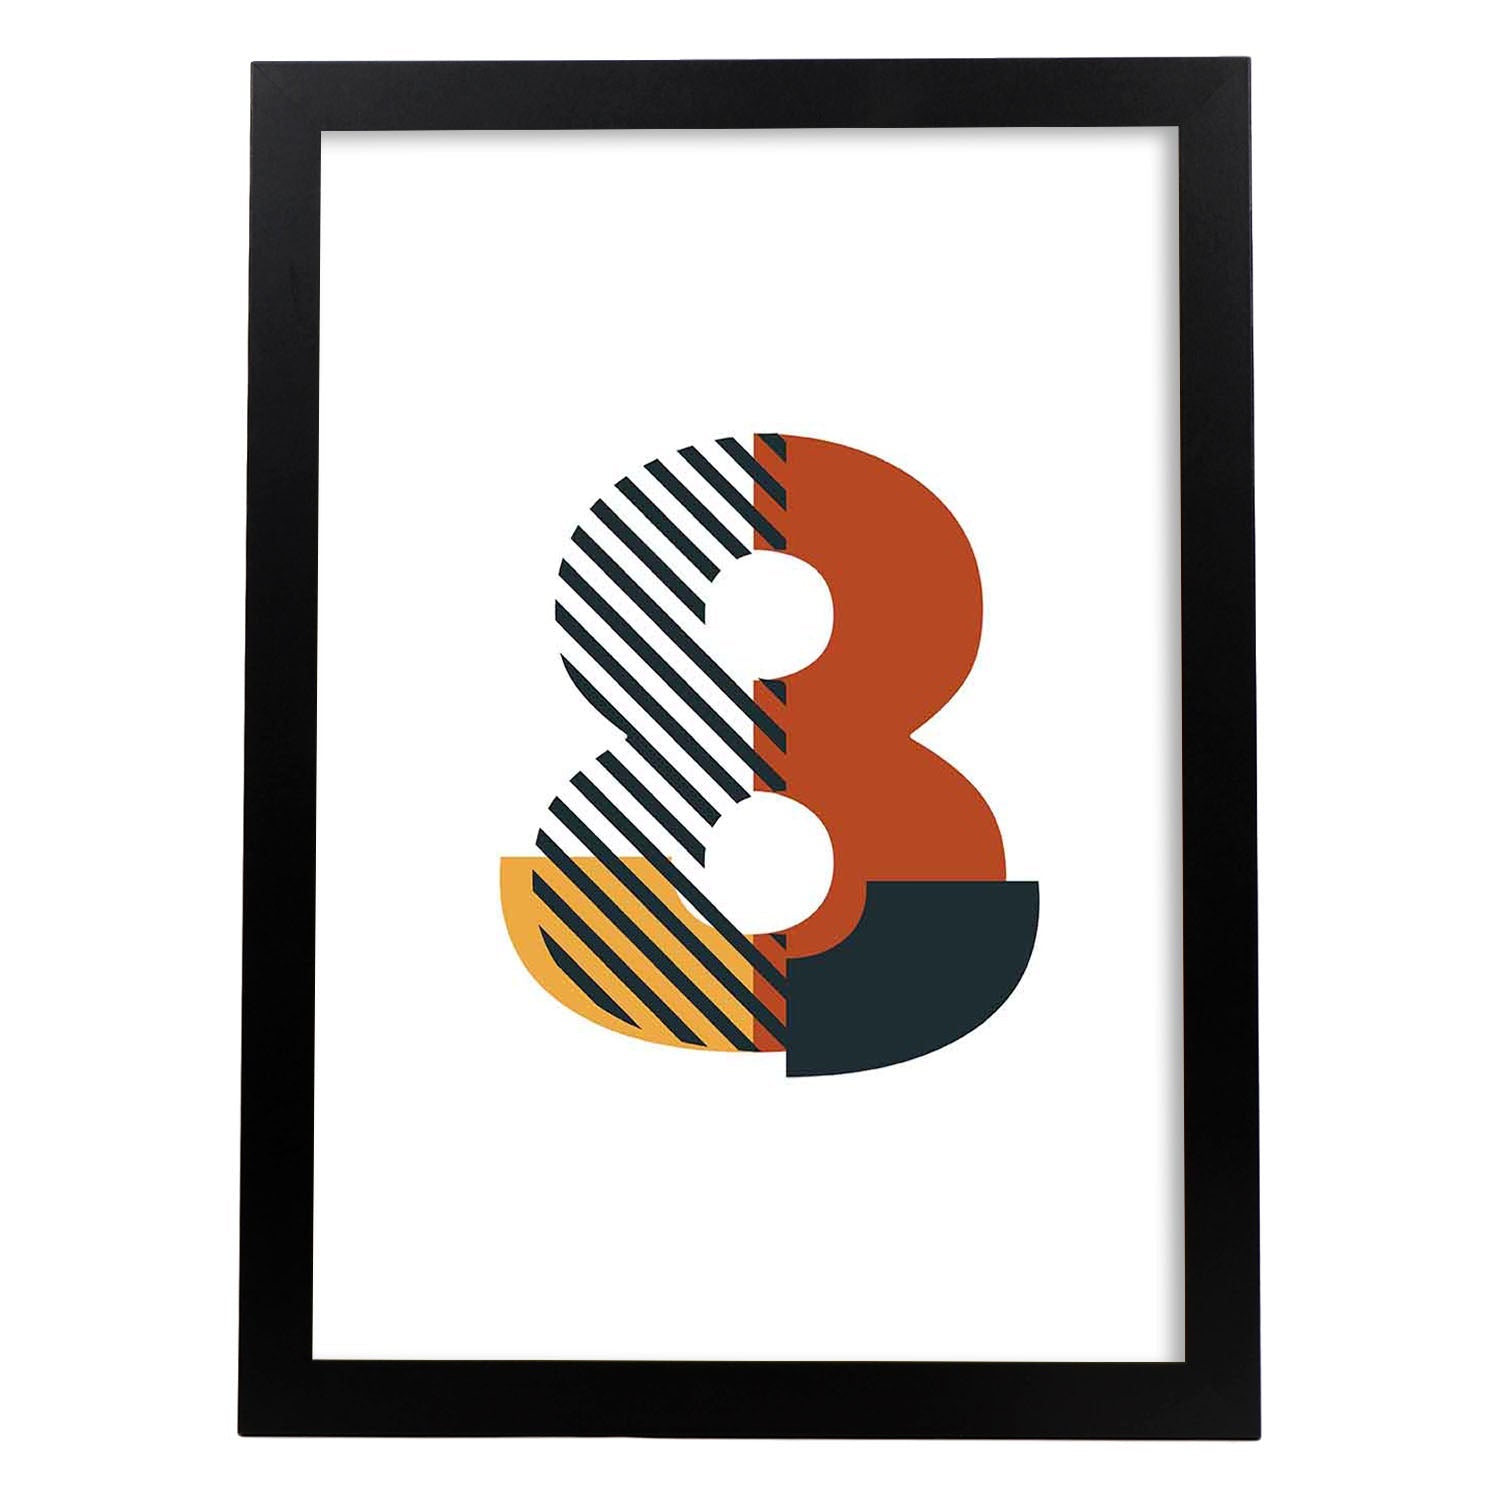 Poster de número 8. Lámina estilo Geometria con imágenes del alfabeto.-Artwork-Nacnic-A3-Marco Negro-Nacnic Estudio SL